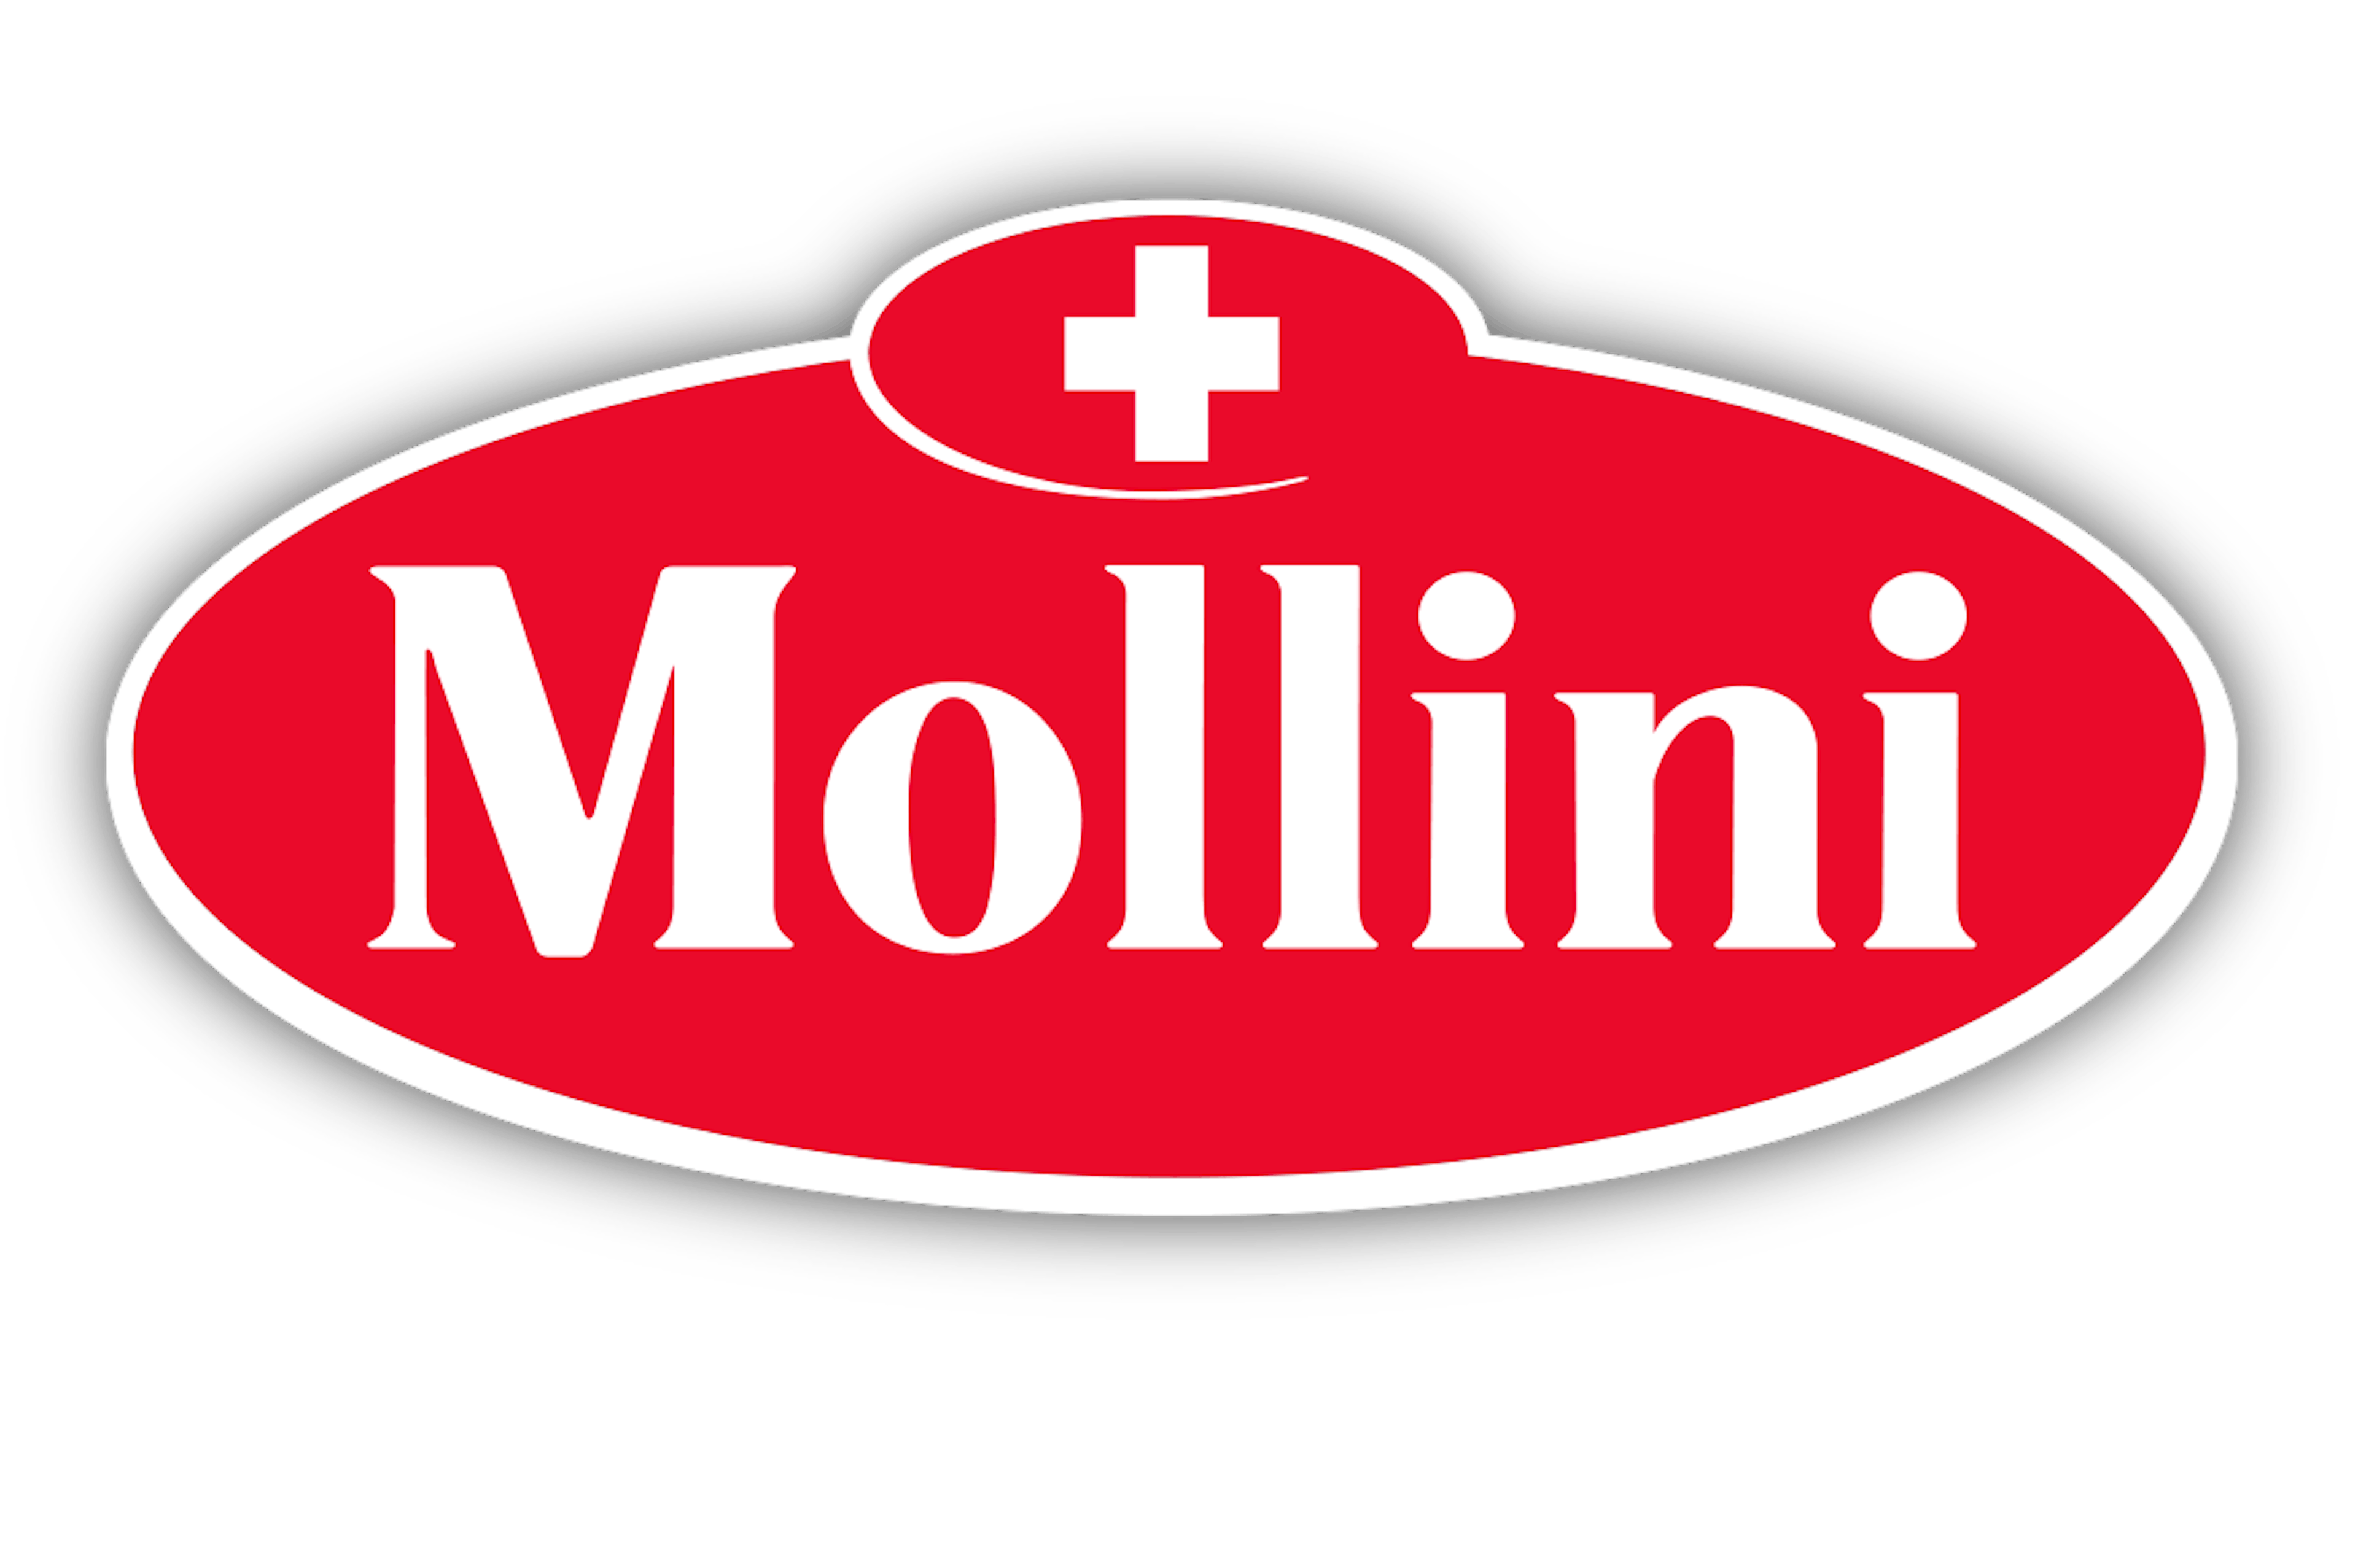 Mollini Logo